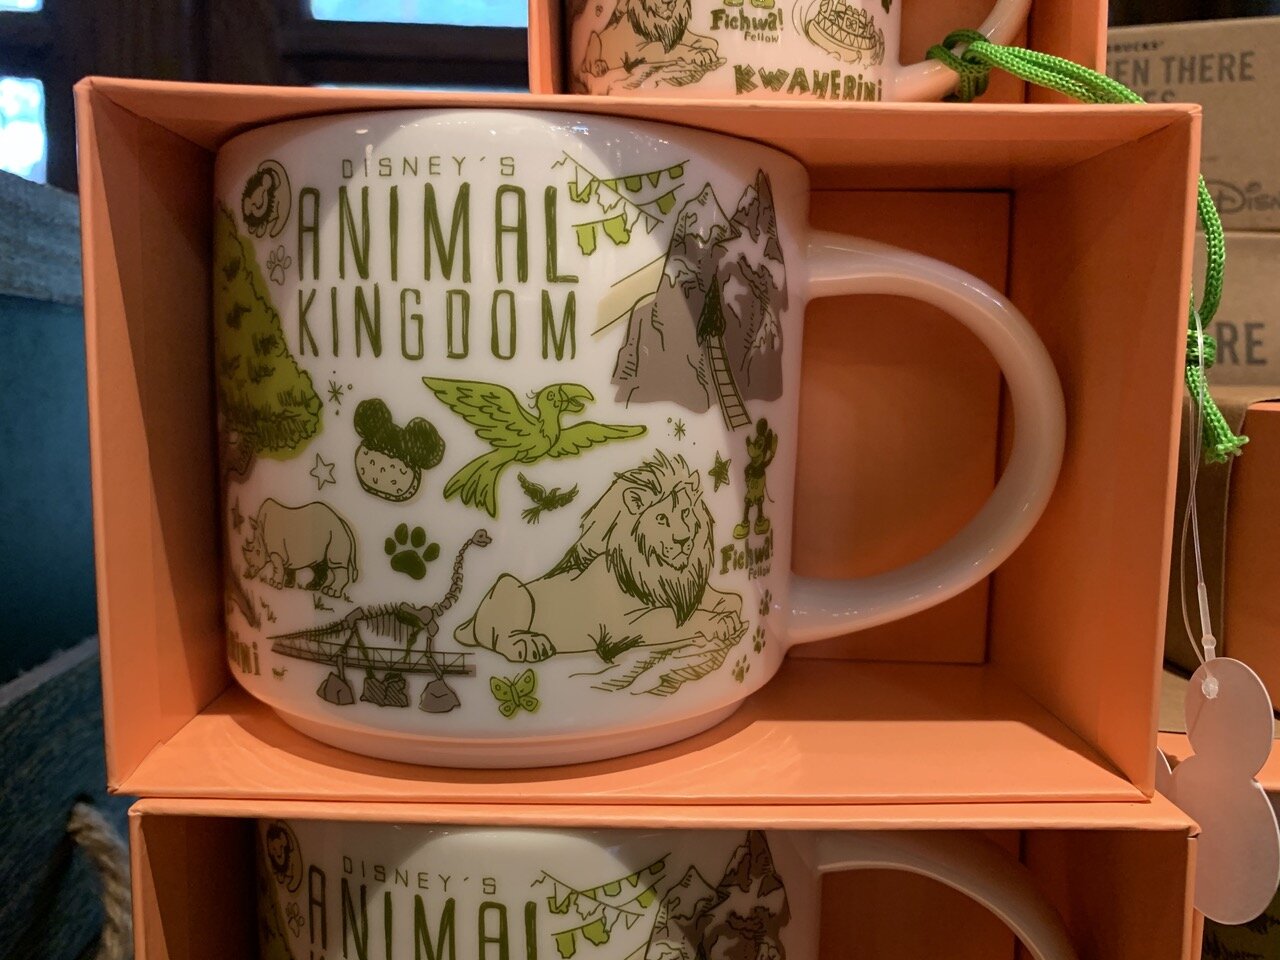 Disney Coffee Cup Mug - Disney's Animal Kingdom Lodge